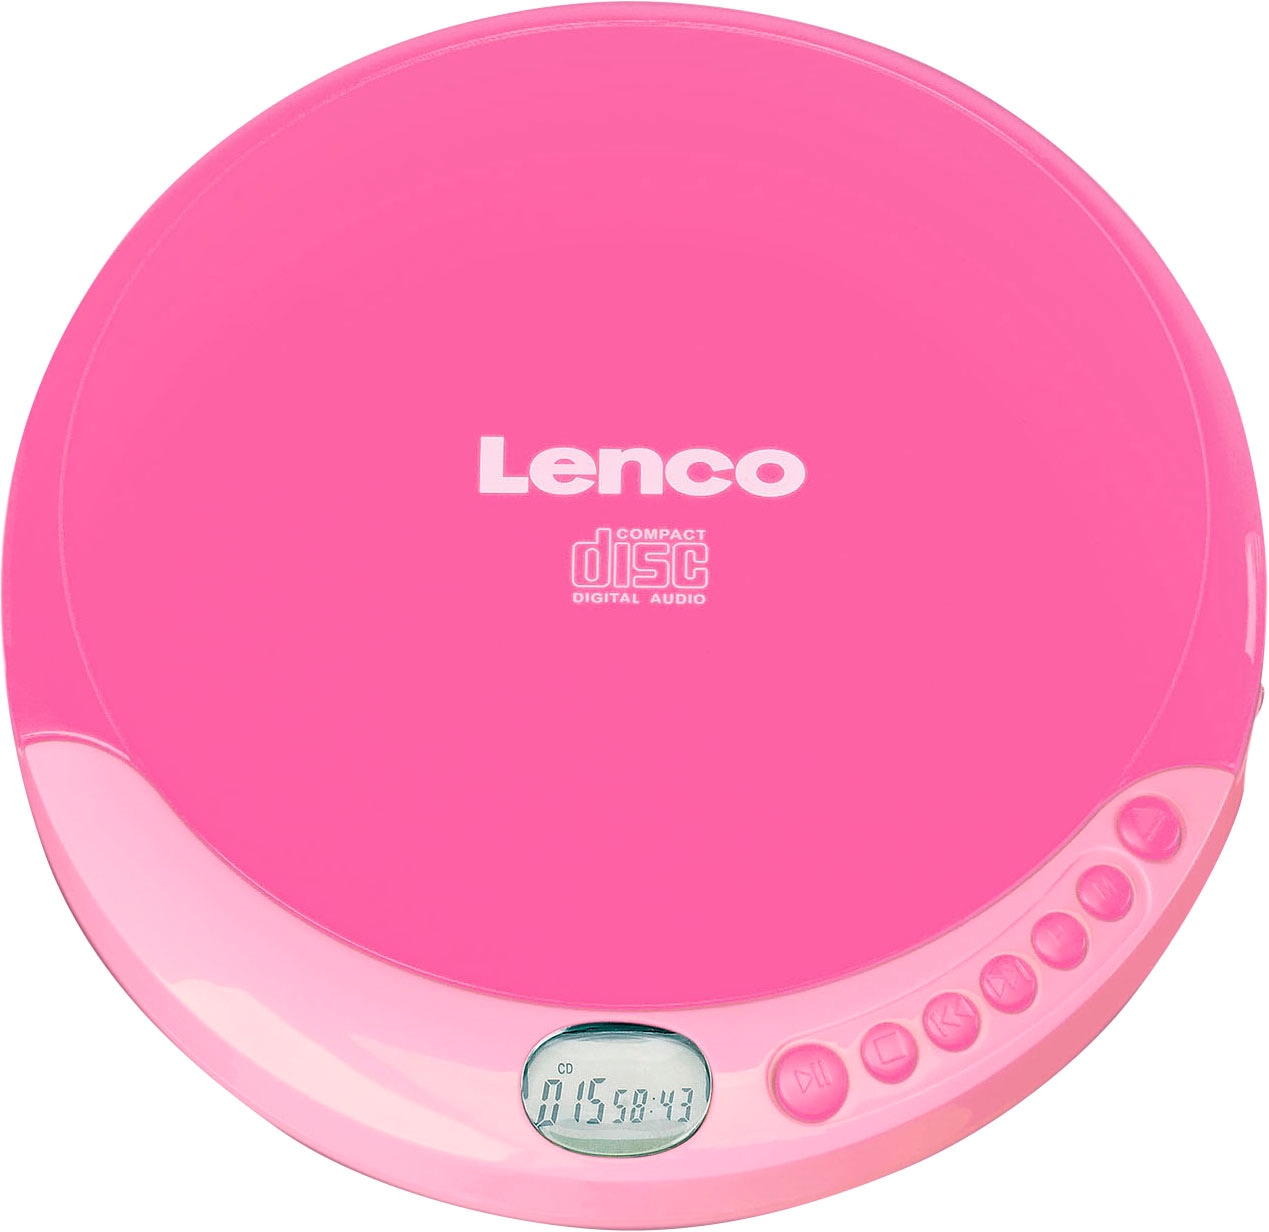 »CD-011« jetzt CD-Player OTTO Lenco kaufen bei